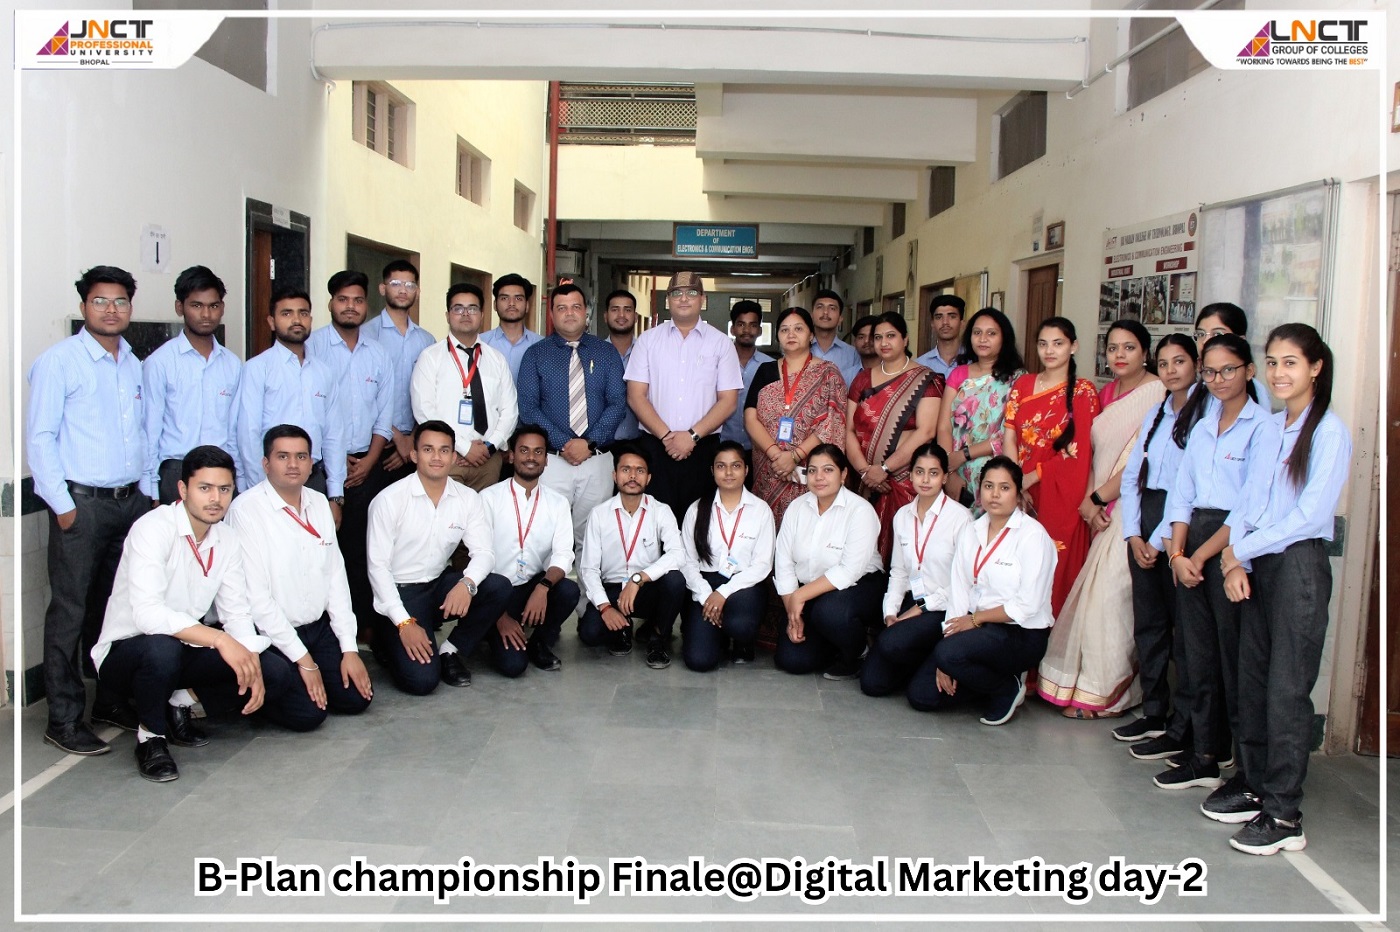 B-Plan Championship Finale and Digital Marketing Workshop at JNCT